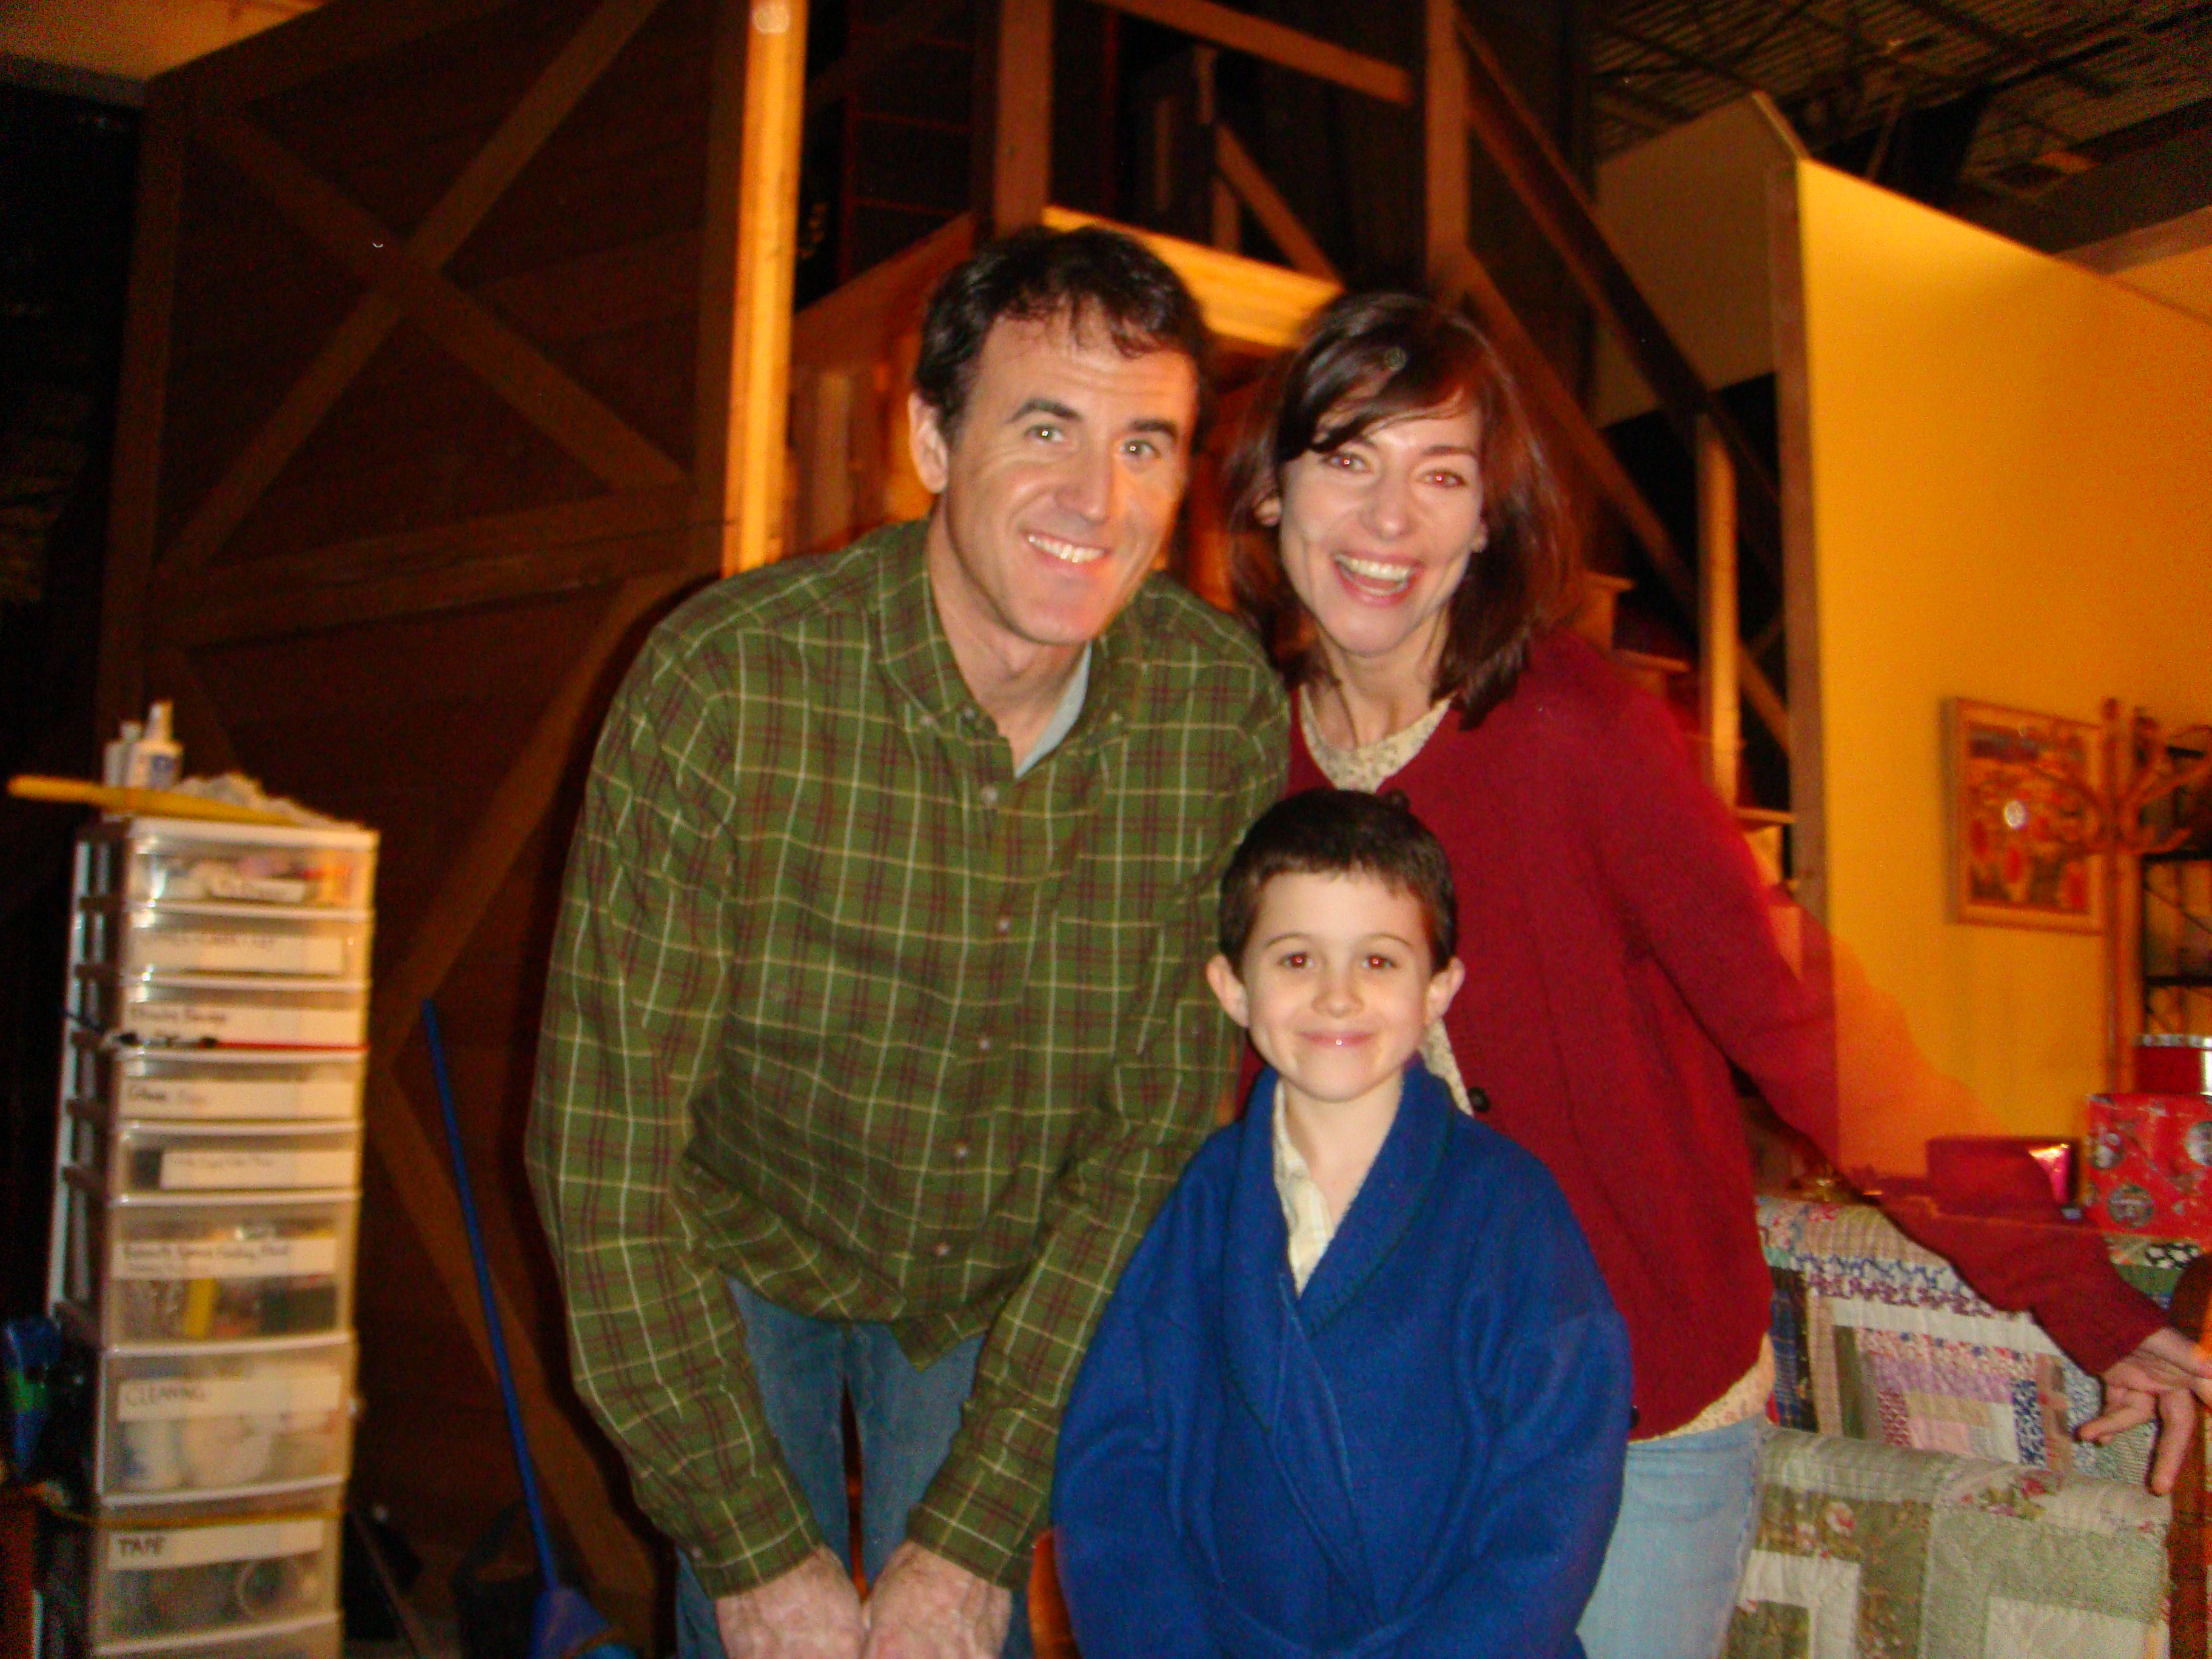 Craig Anton, Andrew Astor & Patricia Cullen on the set of Santa Buddies